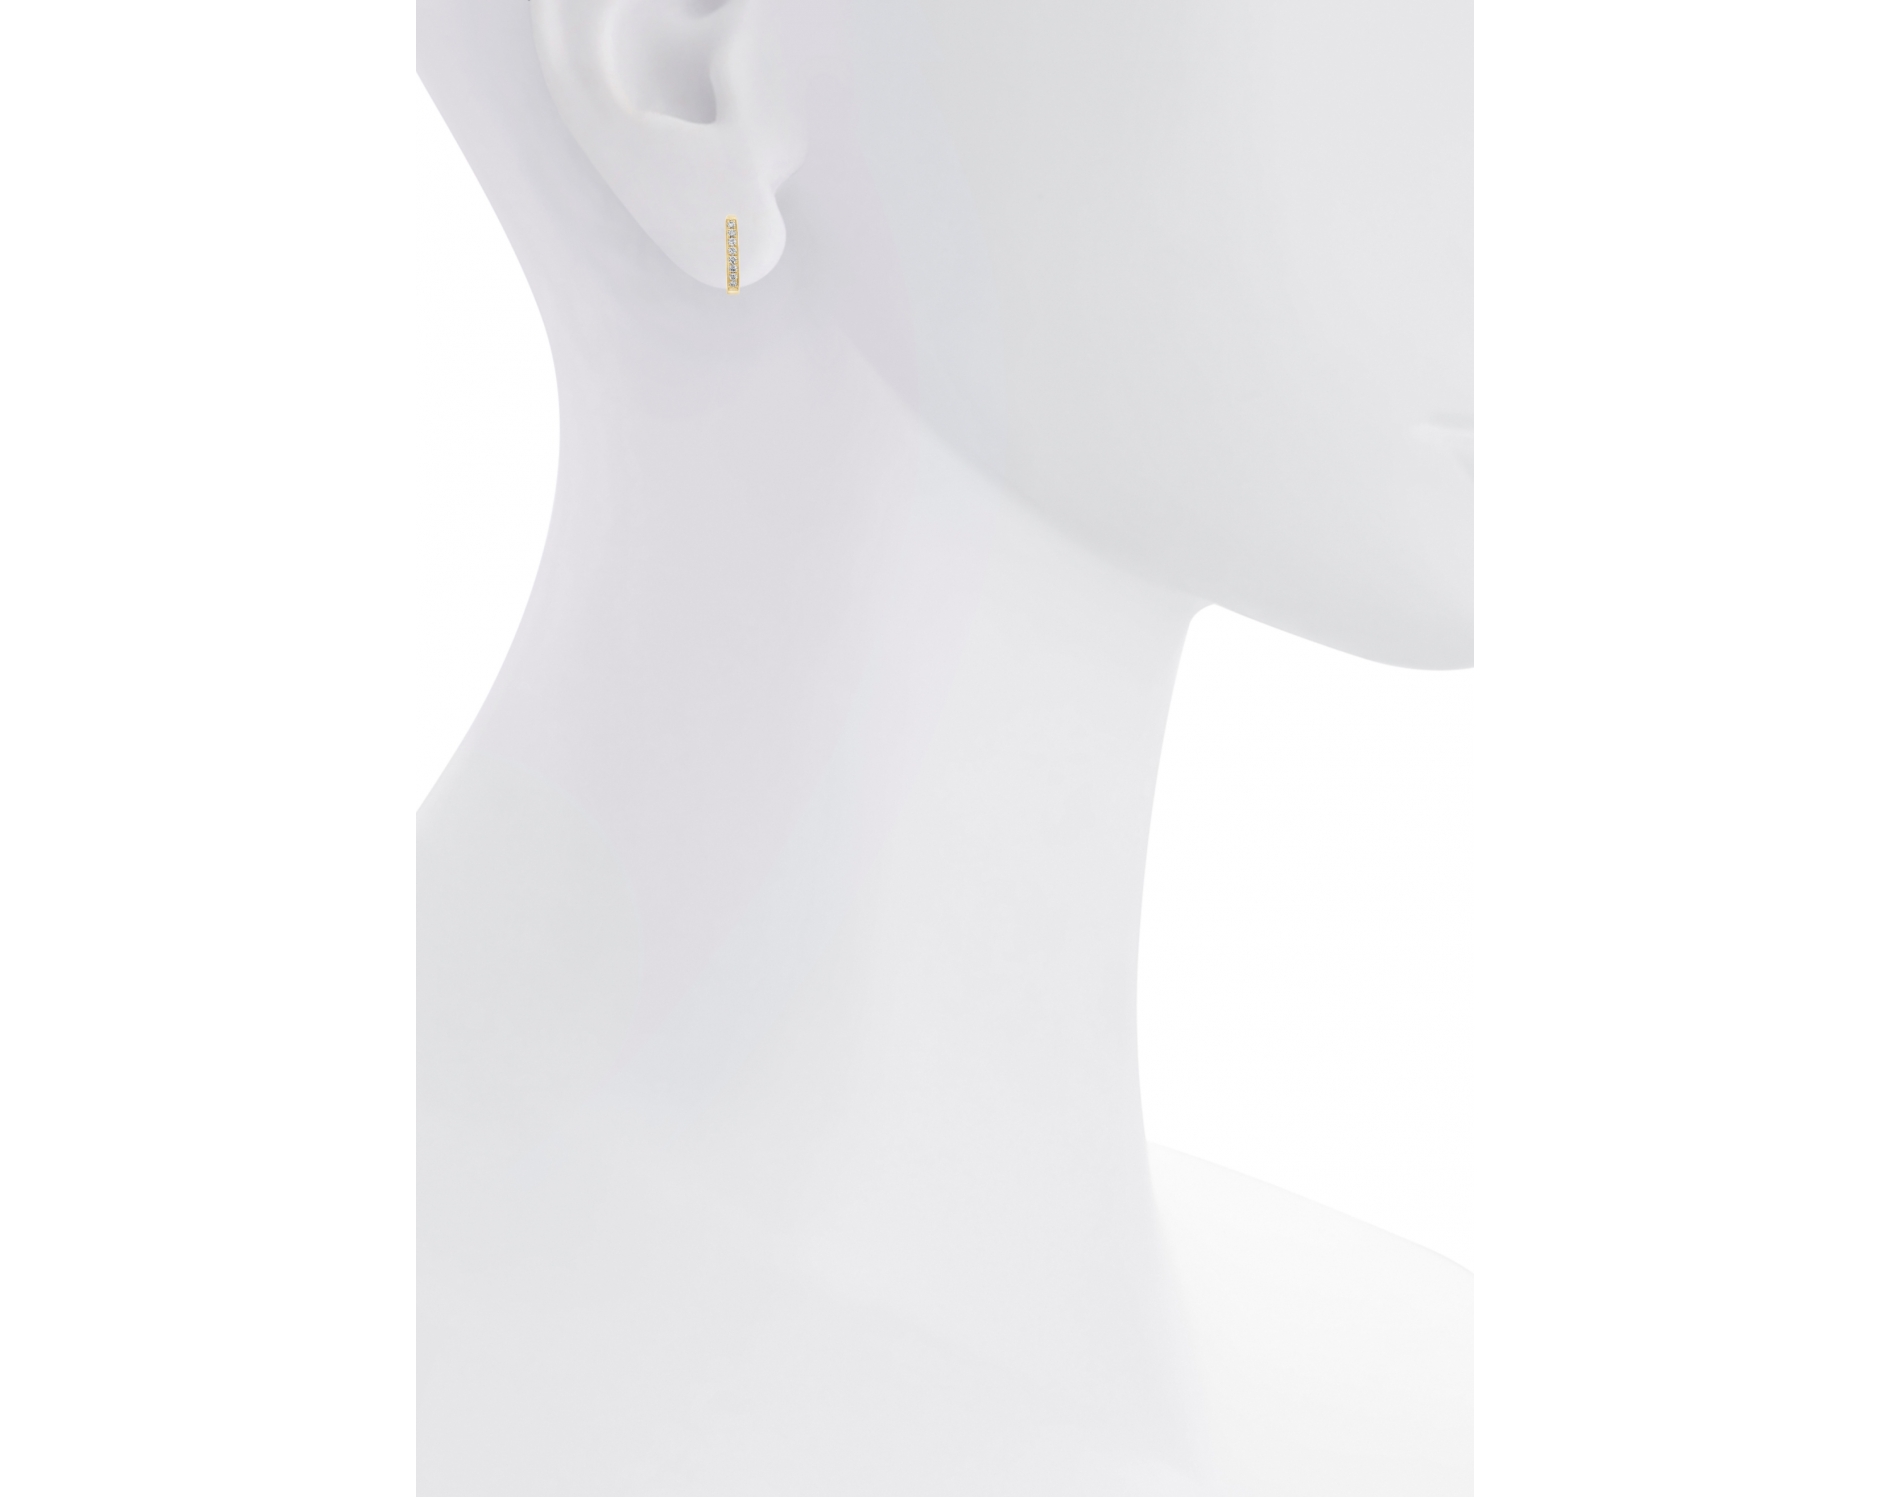 18k yellow gold milgrain hoop diamond earrings